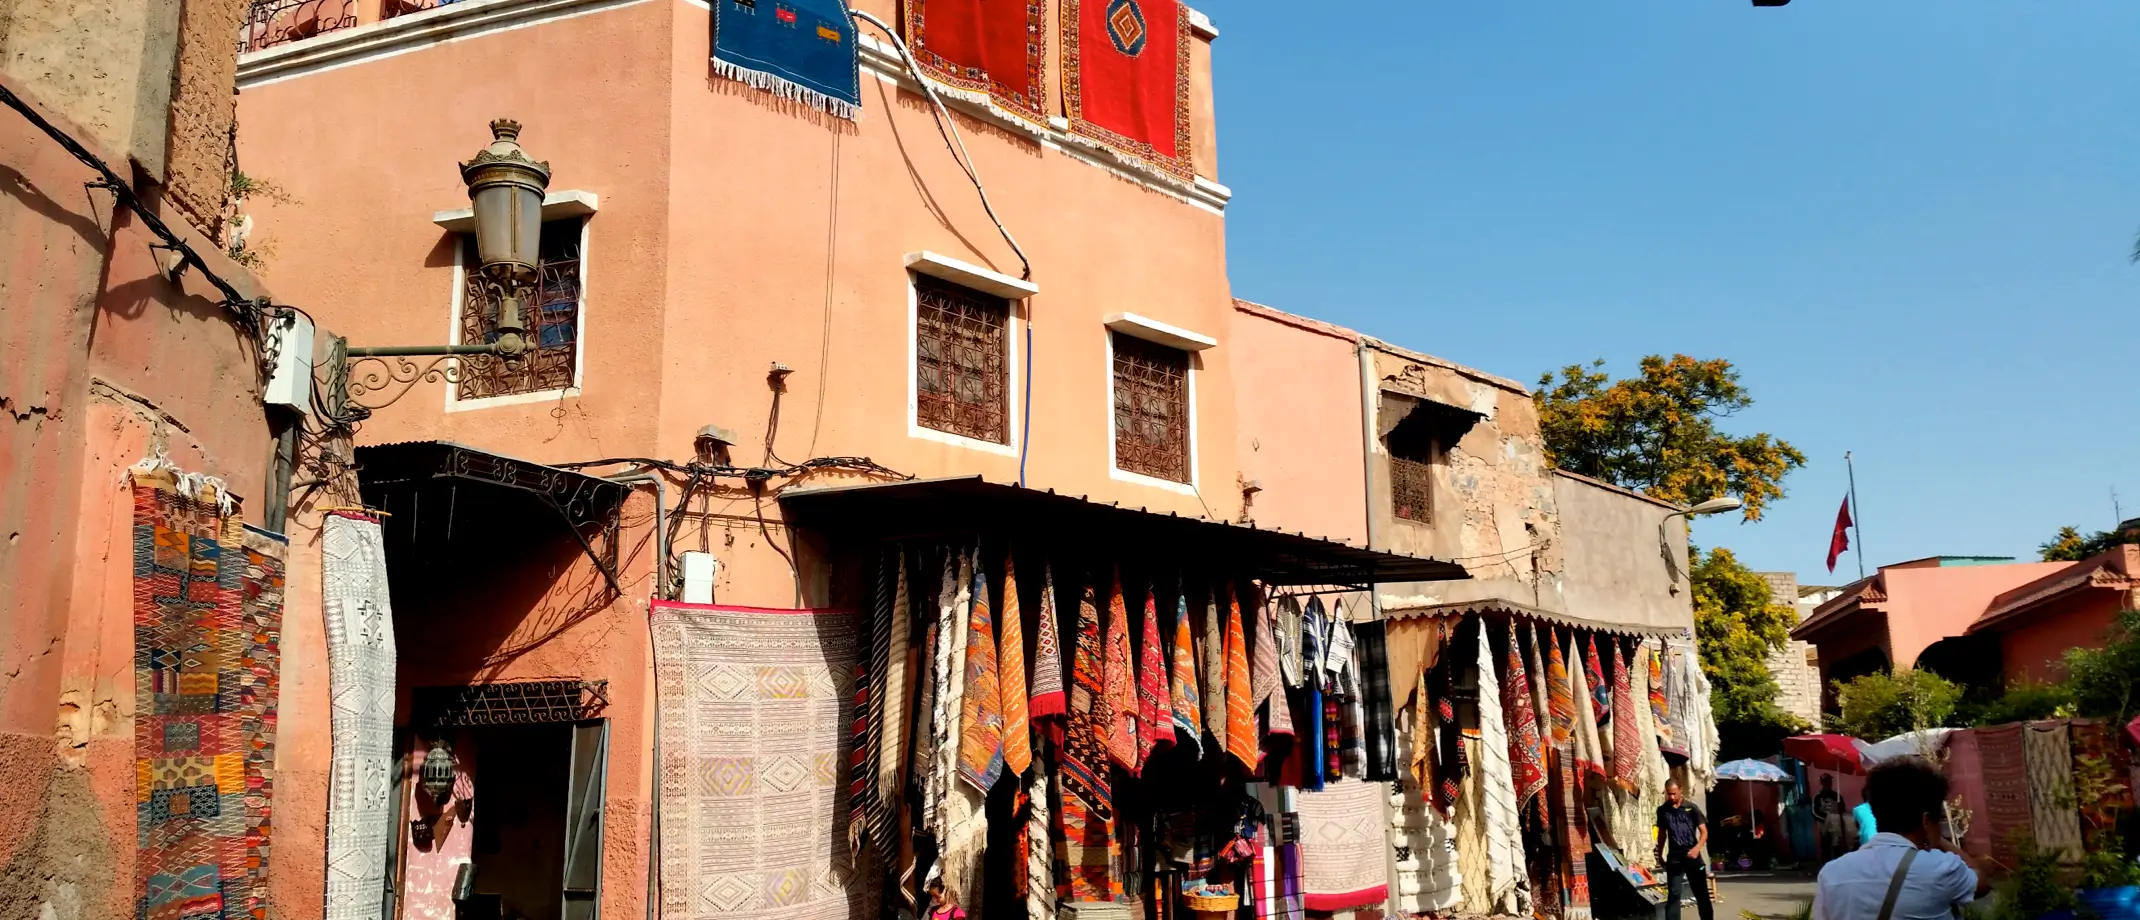 Marrakesh, Morocco - Old Medina Street